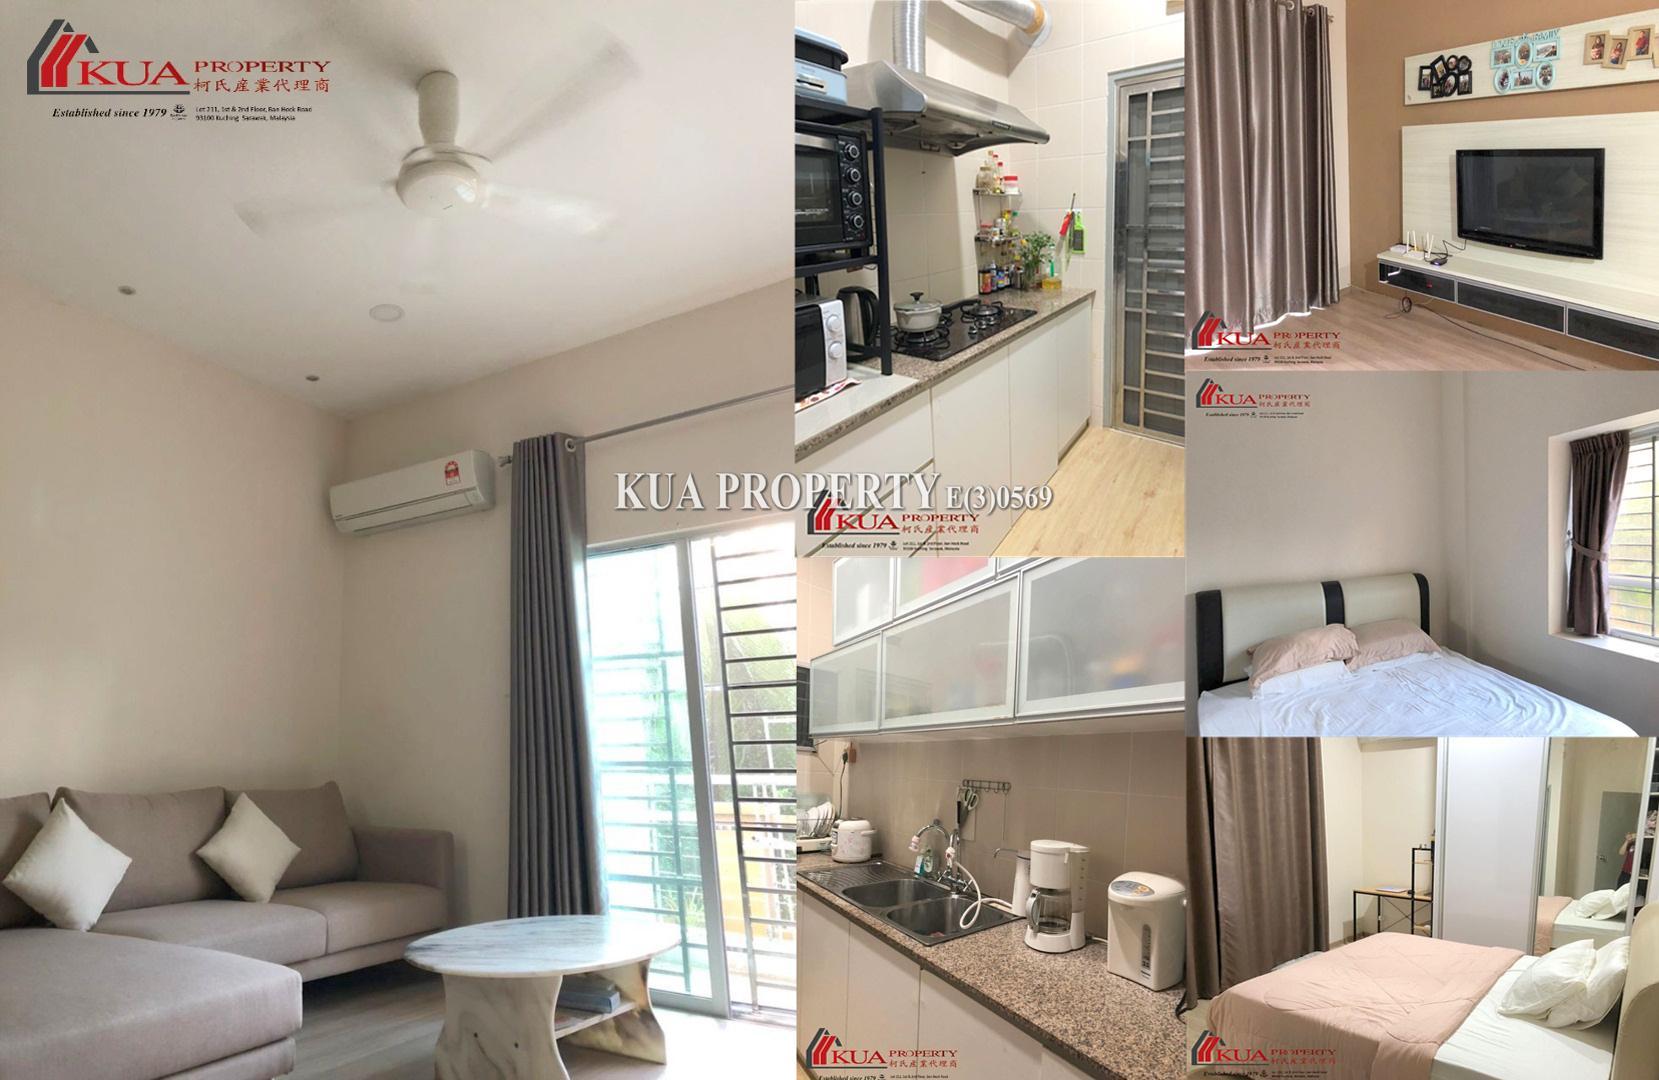 Riveria Bay Apartment For Sale! at Lorong Riveria, Kota Samarahan